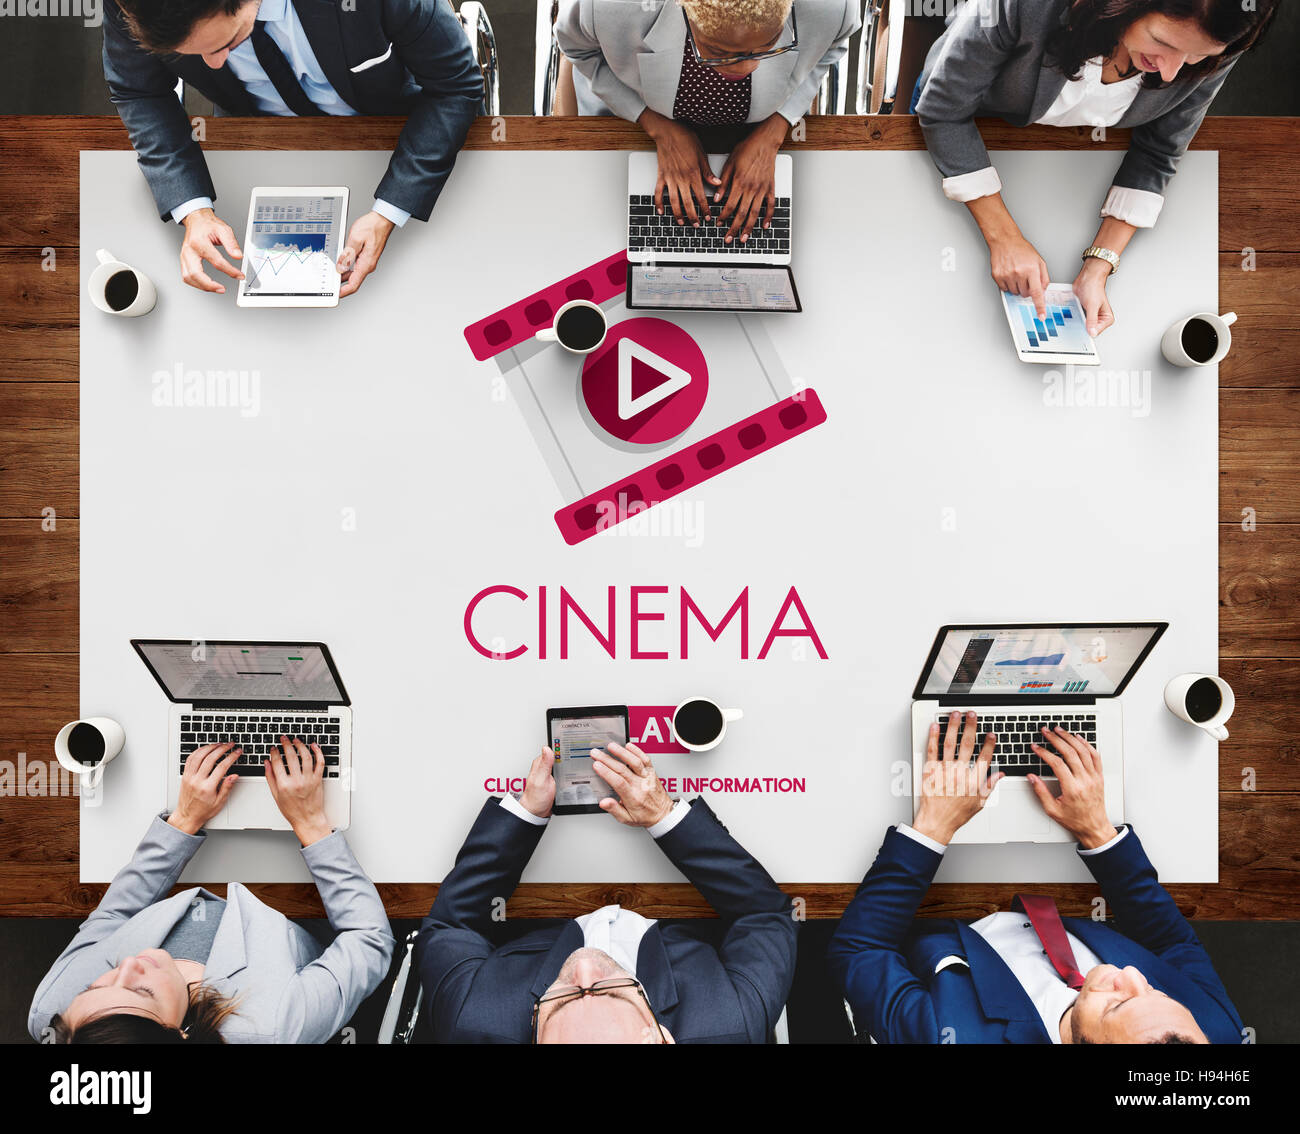 Cinema Theater Multimedia Film Entertainment Concept Stock Photo